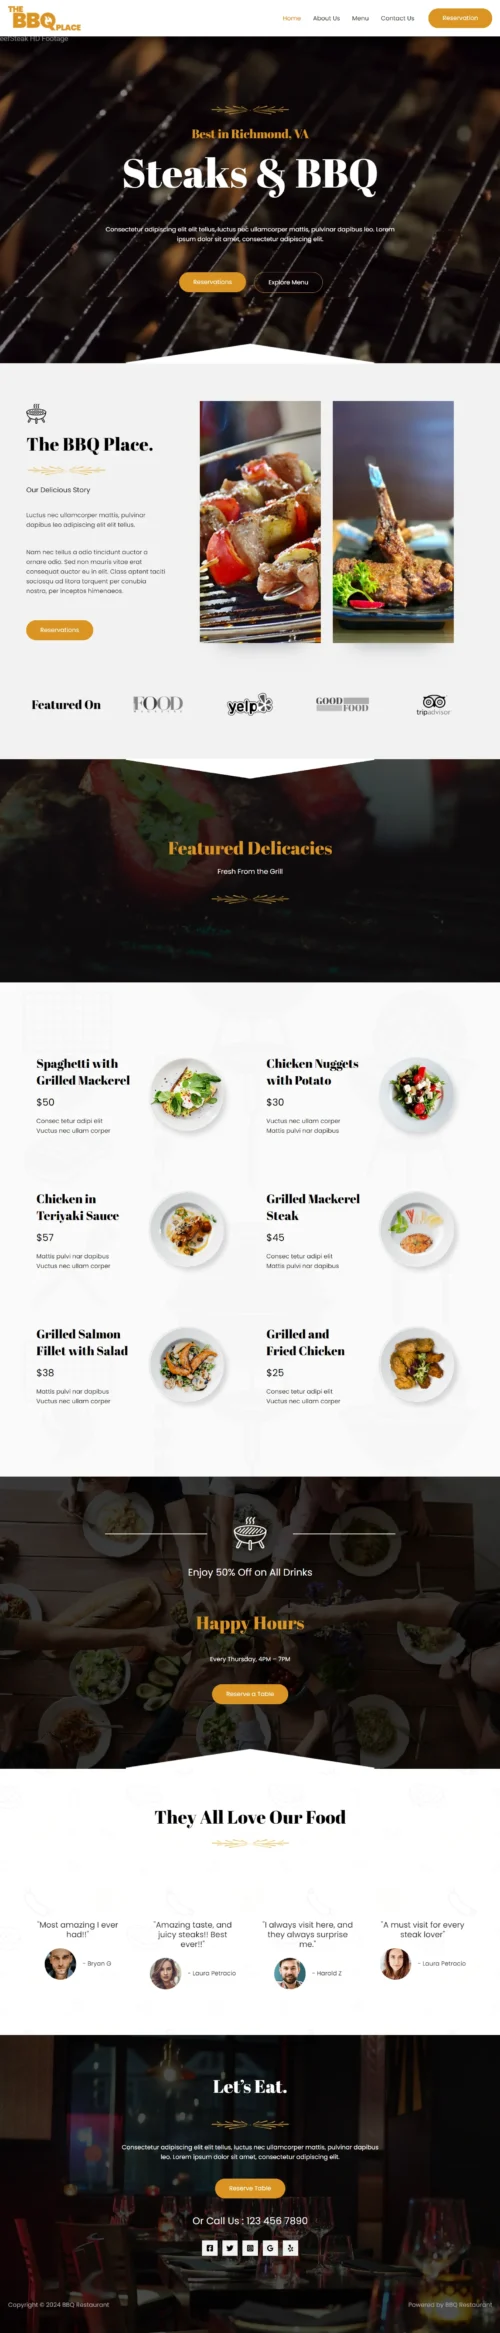 BBQ Restaurant digitizer sol WordPress Themes